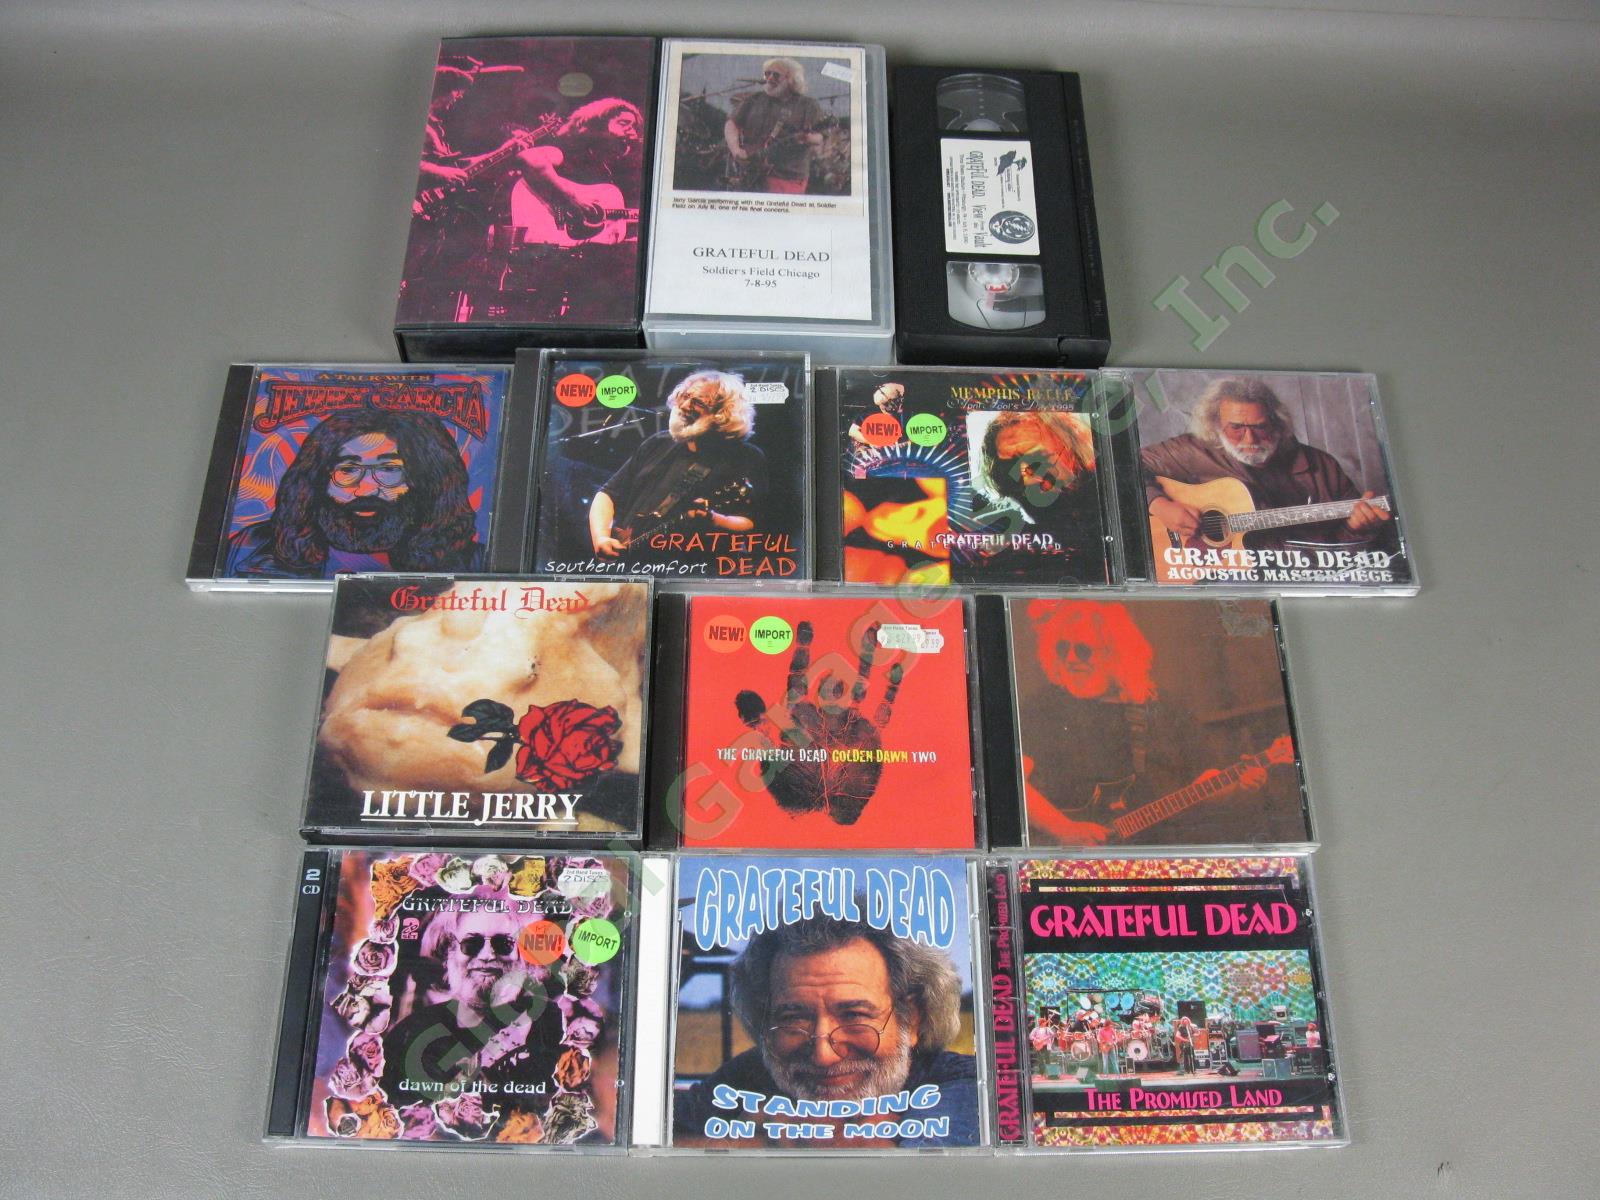 Vtg 1990s Grateful Dead Live Unreleased Show Concert Import CD VHS Lot 16 Discs